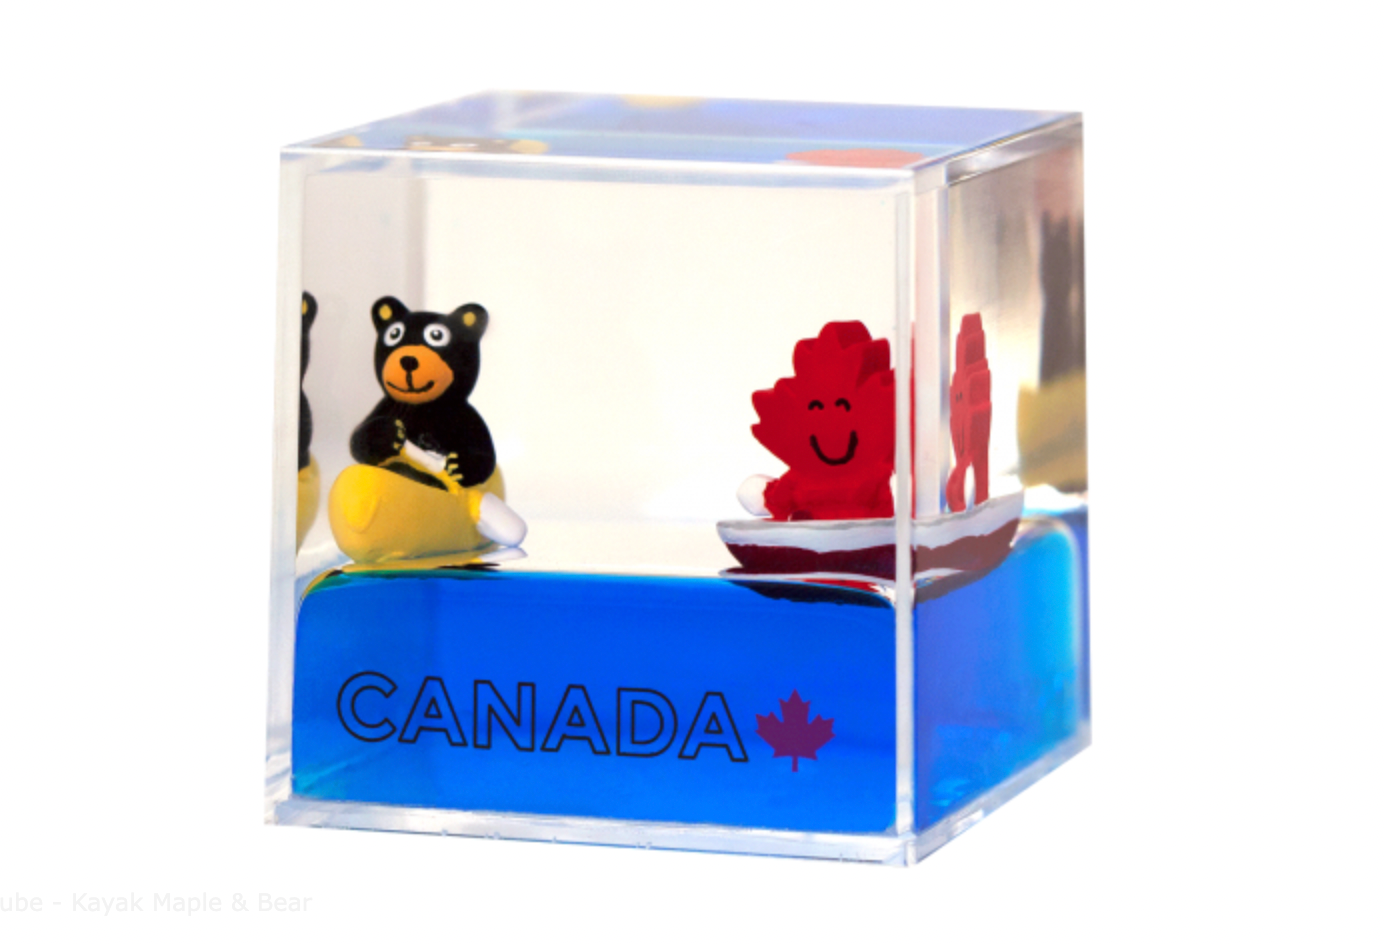 Floating Cube - Kayak Maple & Bear